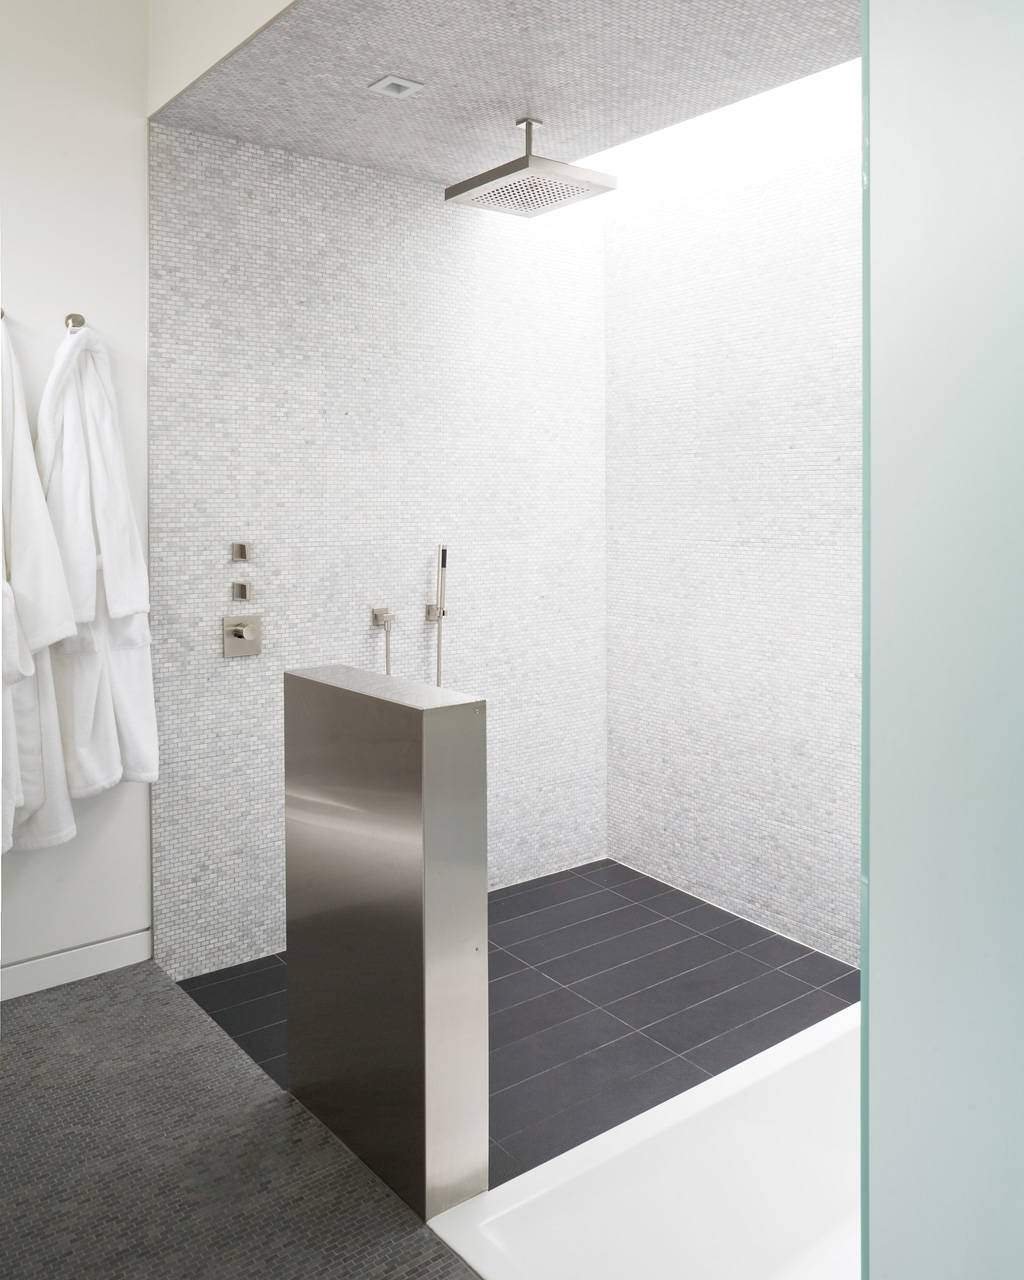 Design bagno moderno con pavimento, rivestimento e soffitto in mosaico - bordo vasca a filo pavimento